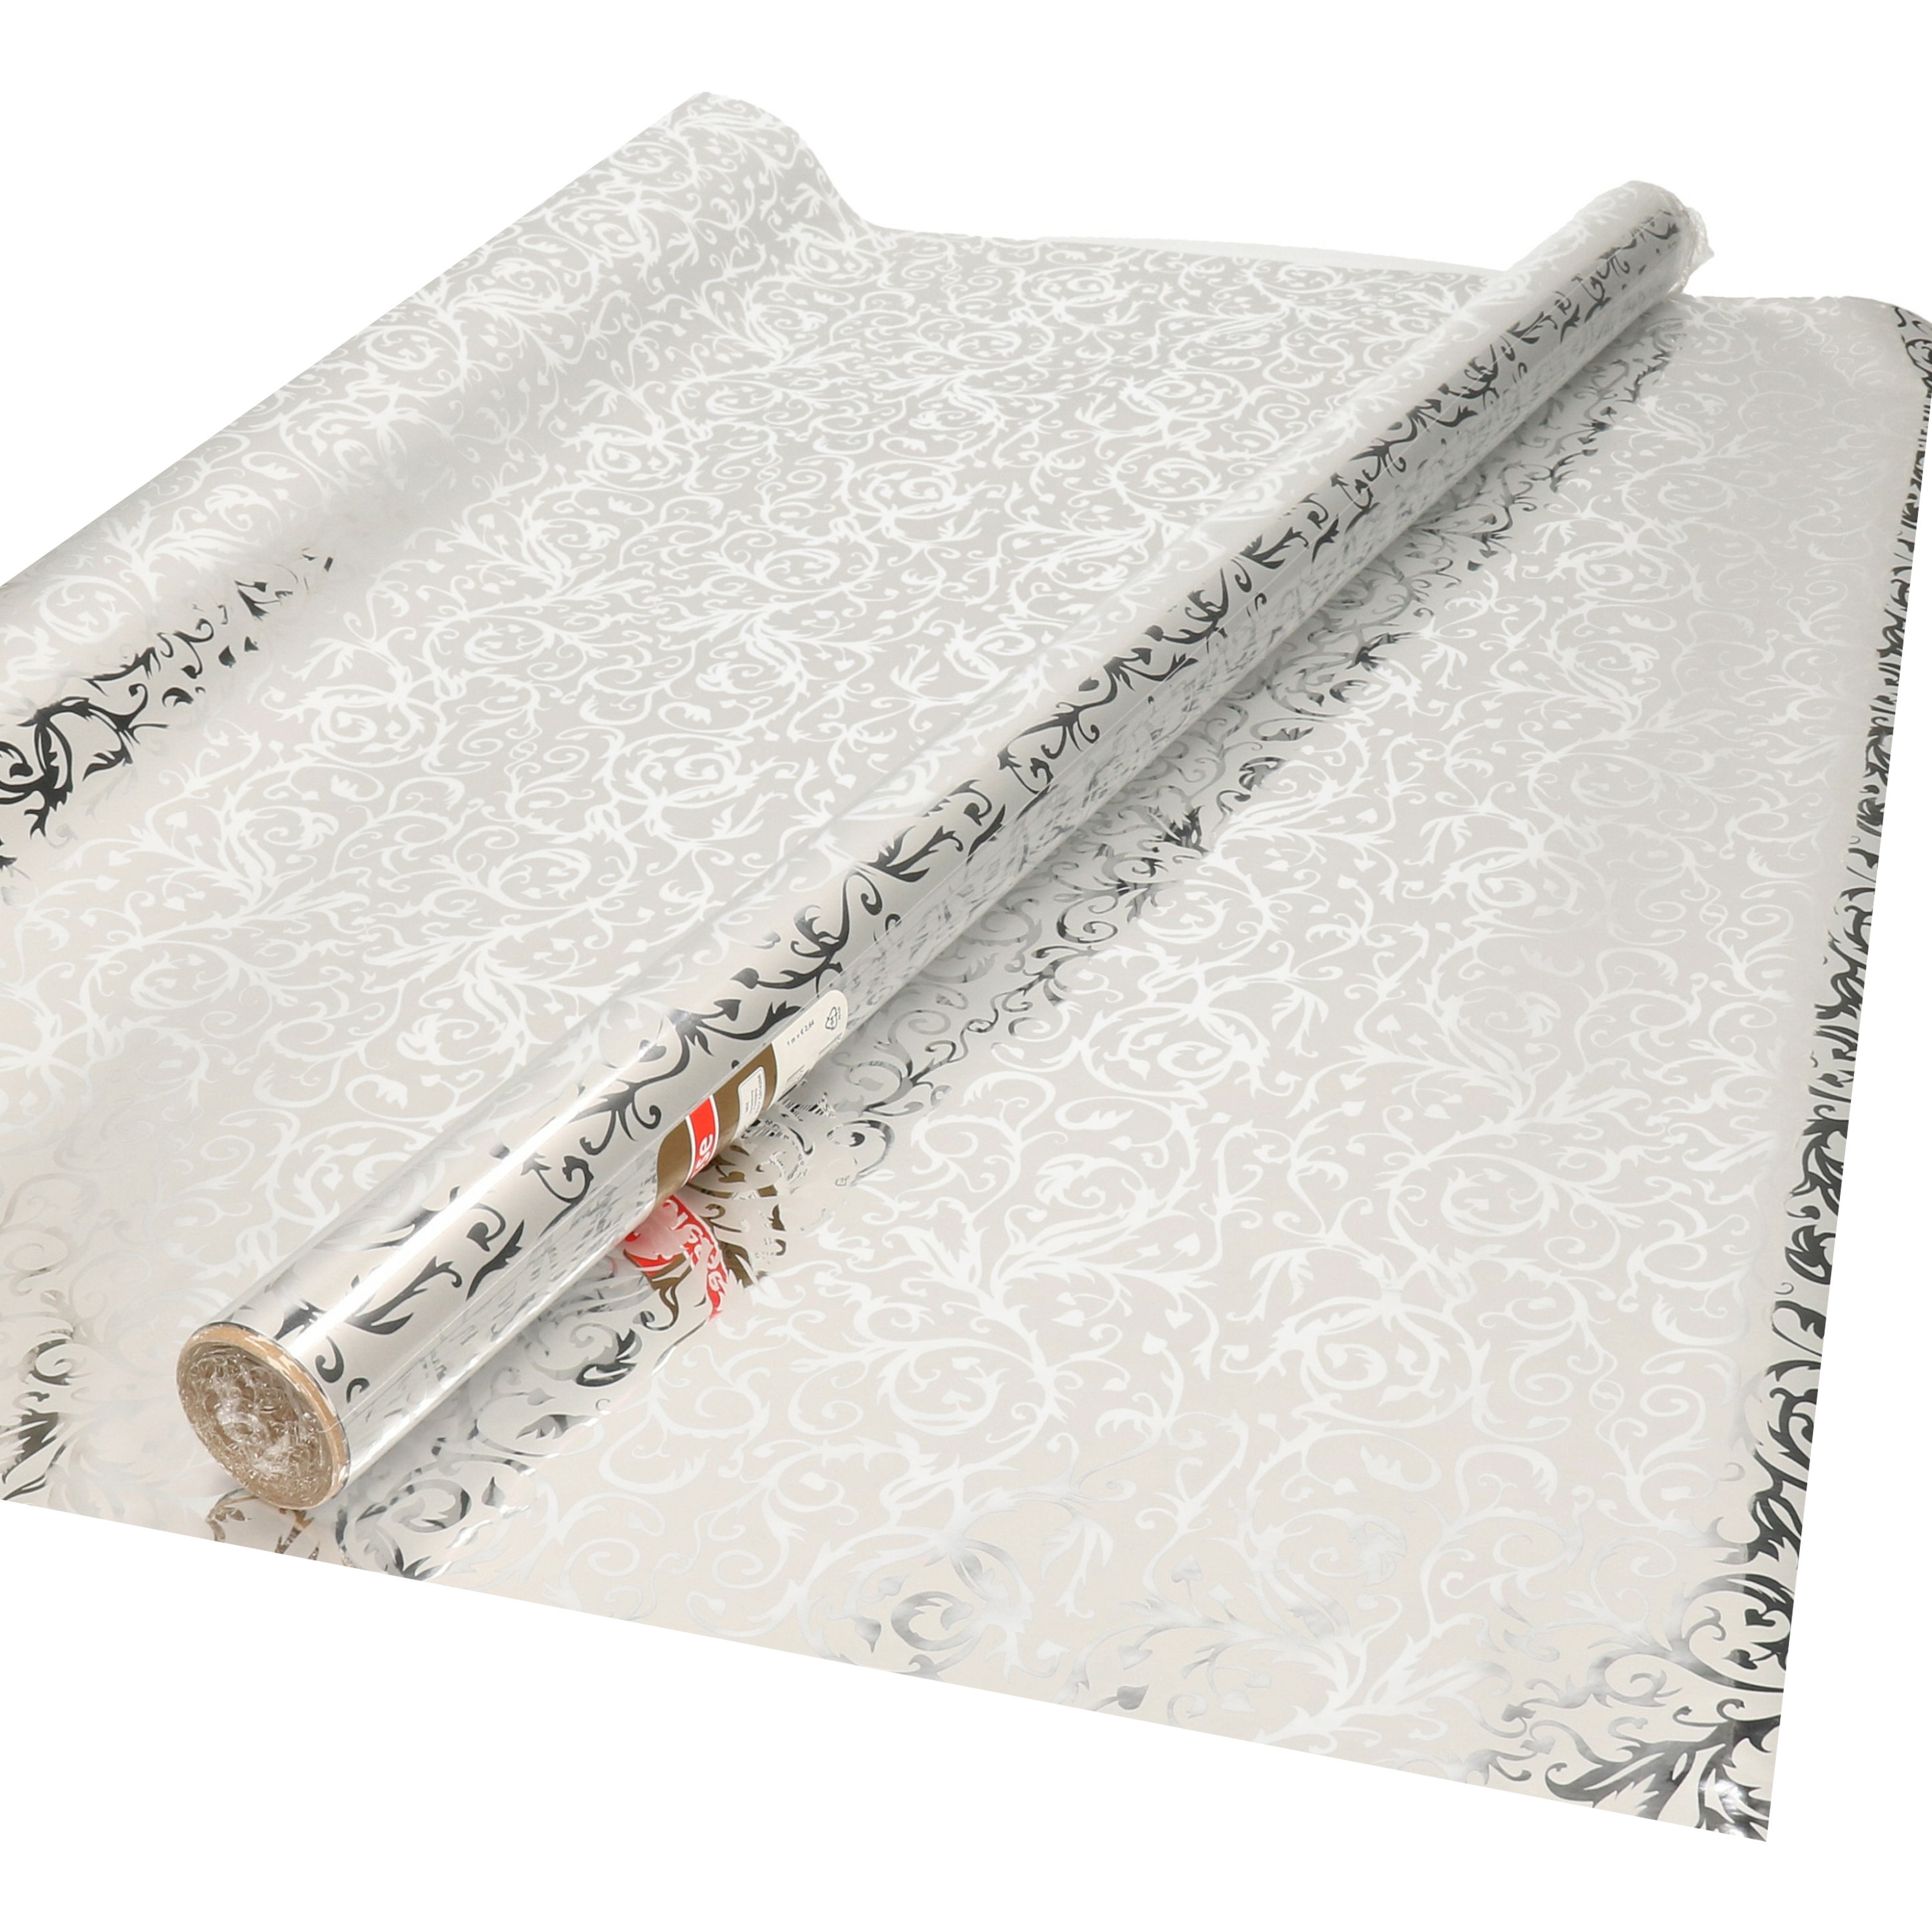 Inpak-cadeaufolie zilver klassiek design 150 x 70 cm